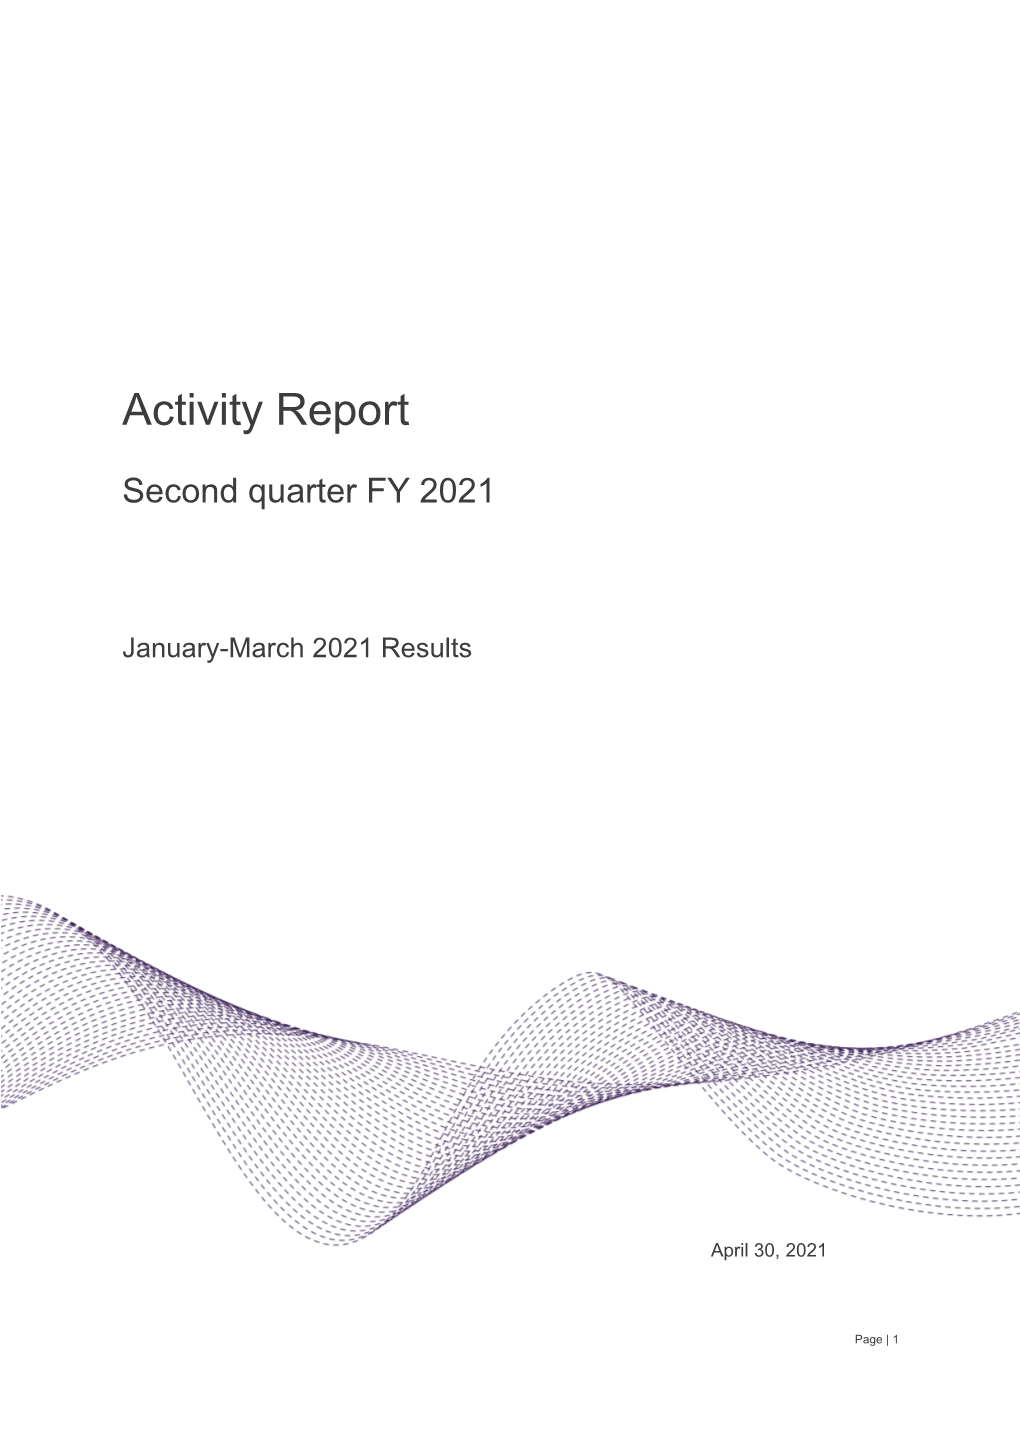 Activity Report Second Quarter FY 2021